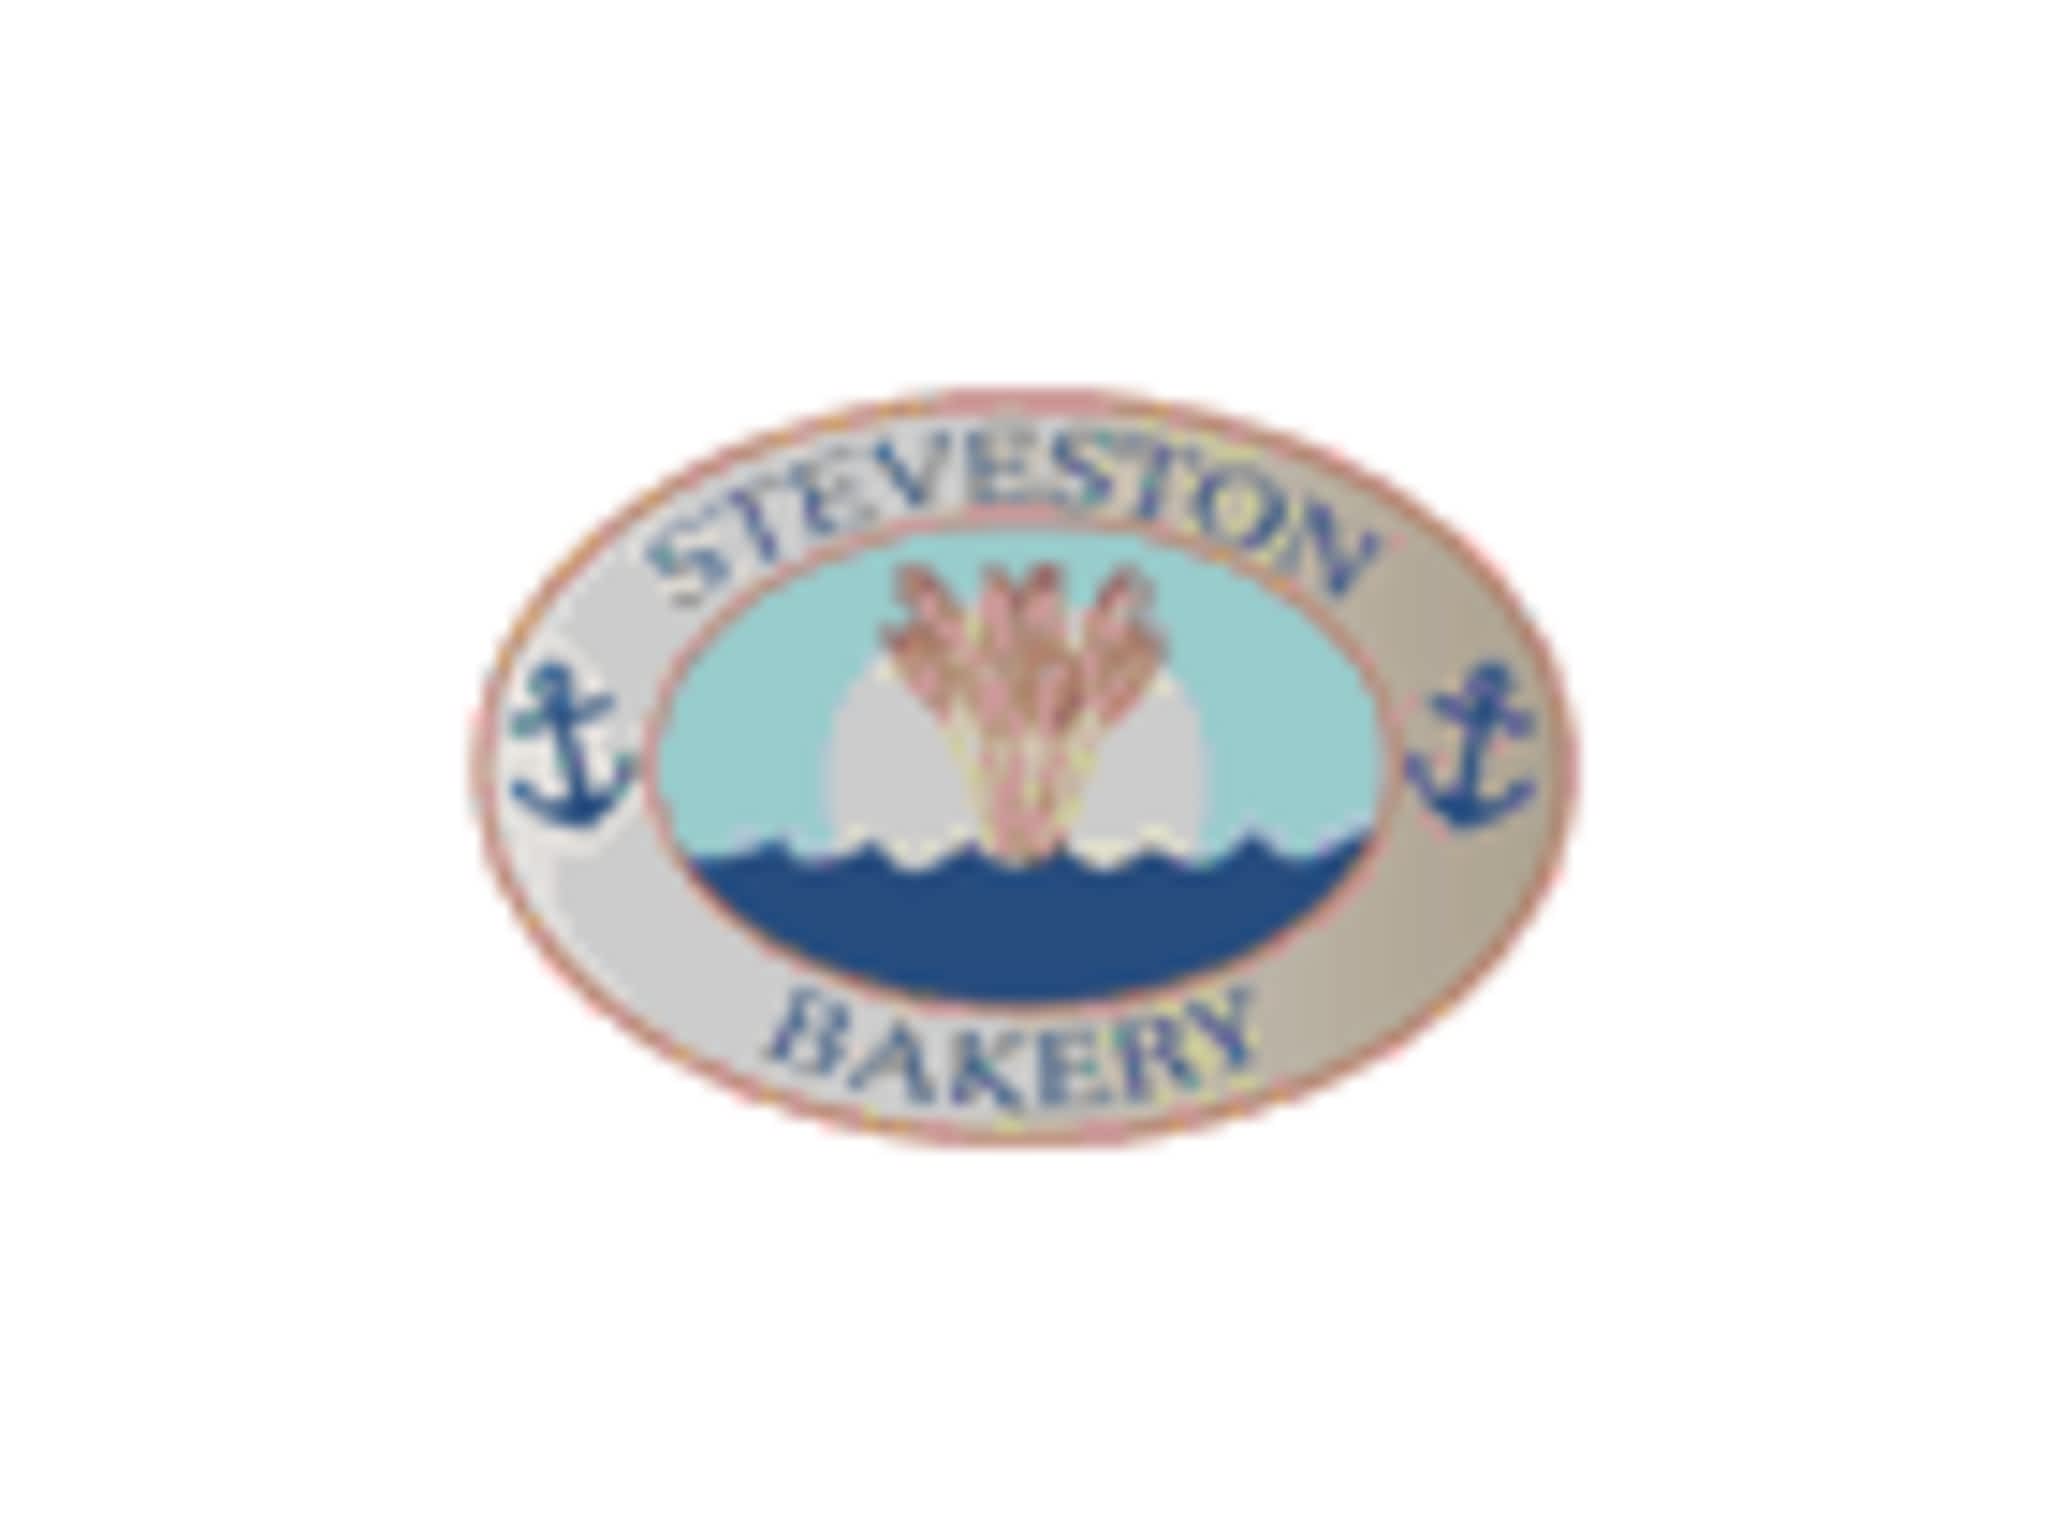 photo Steveston Bakery Ltd